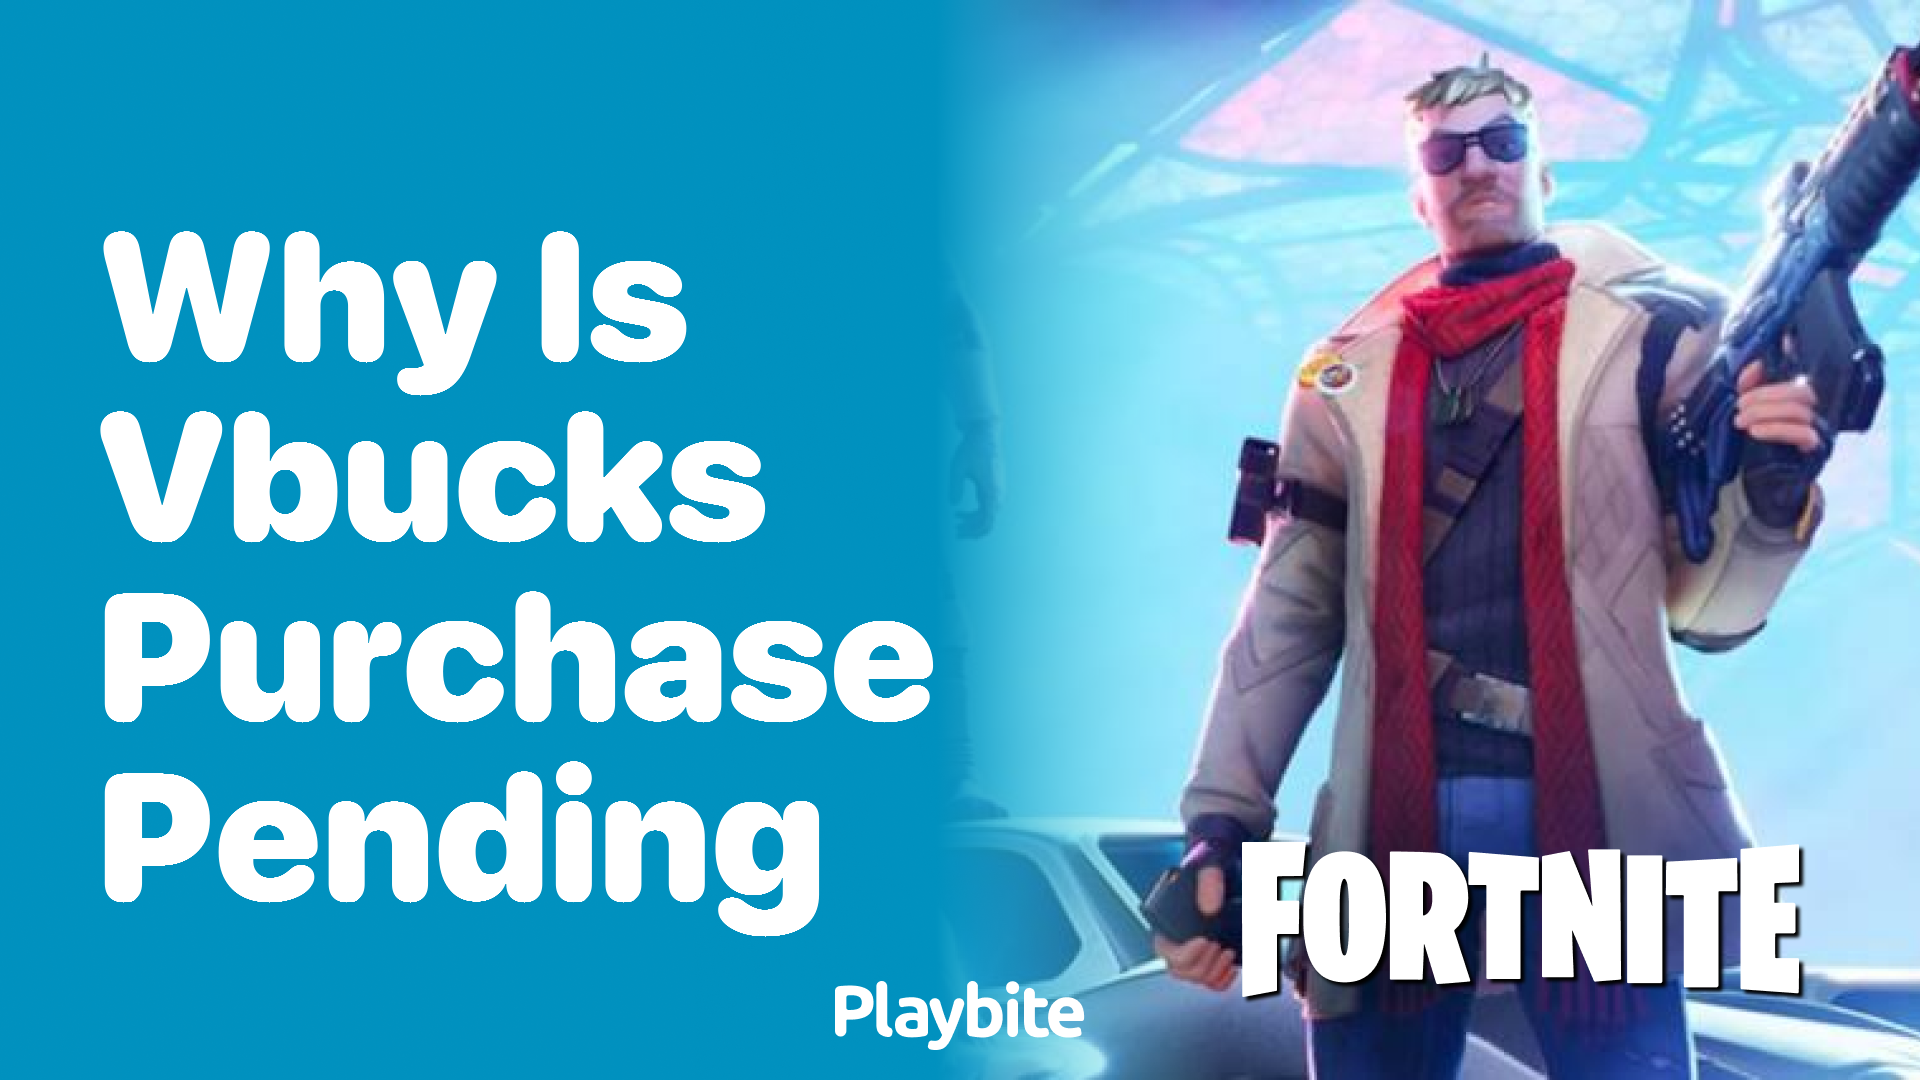 Why Is My VBucks Purchase Pending in Fortnite?